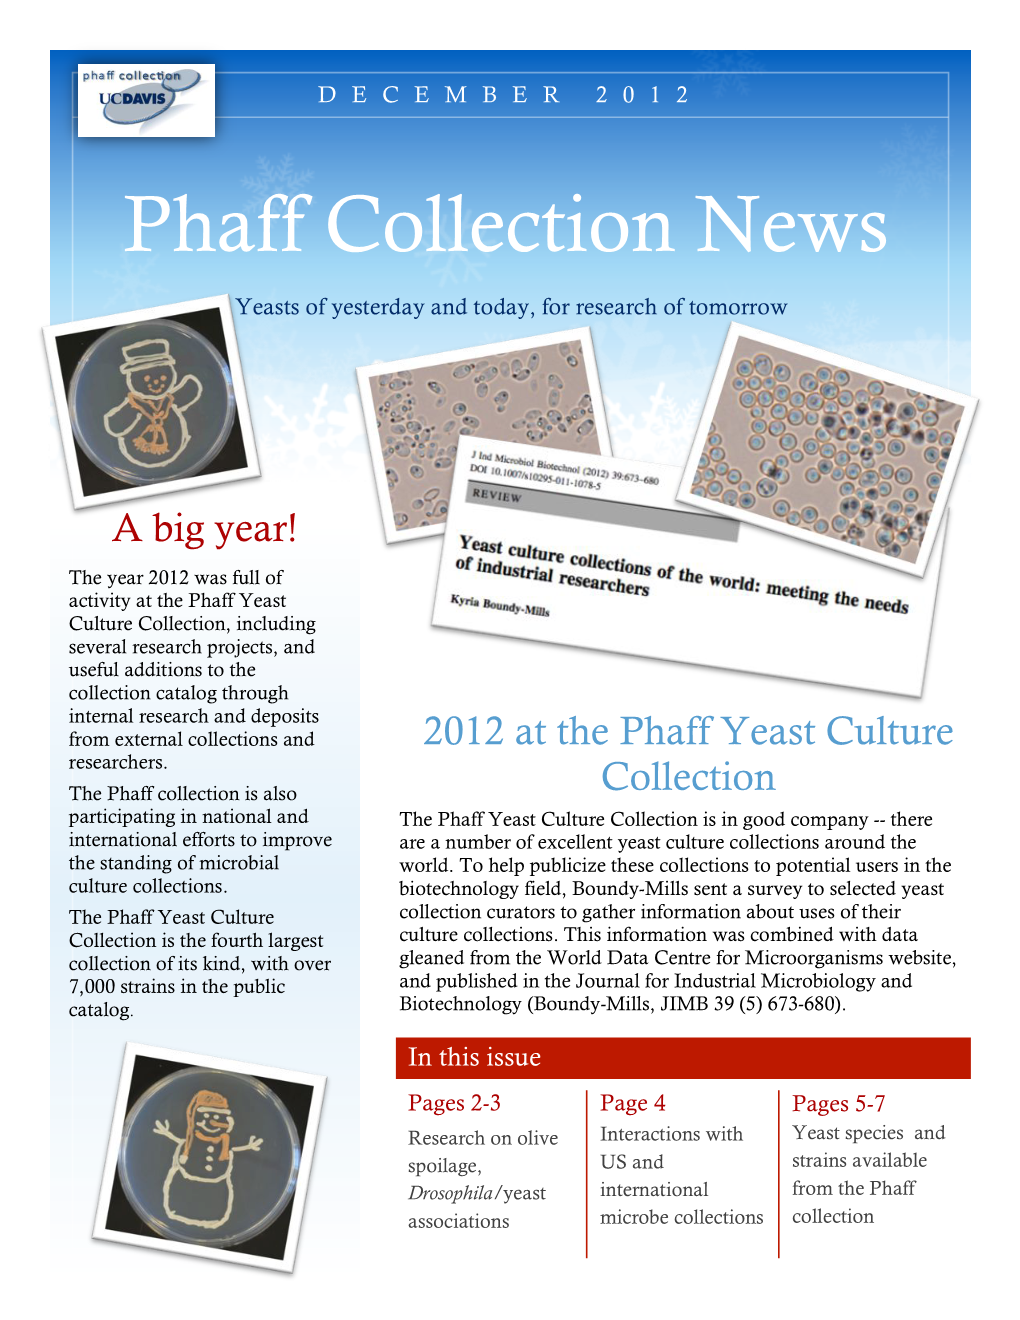 Phaff Collection News 2012